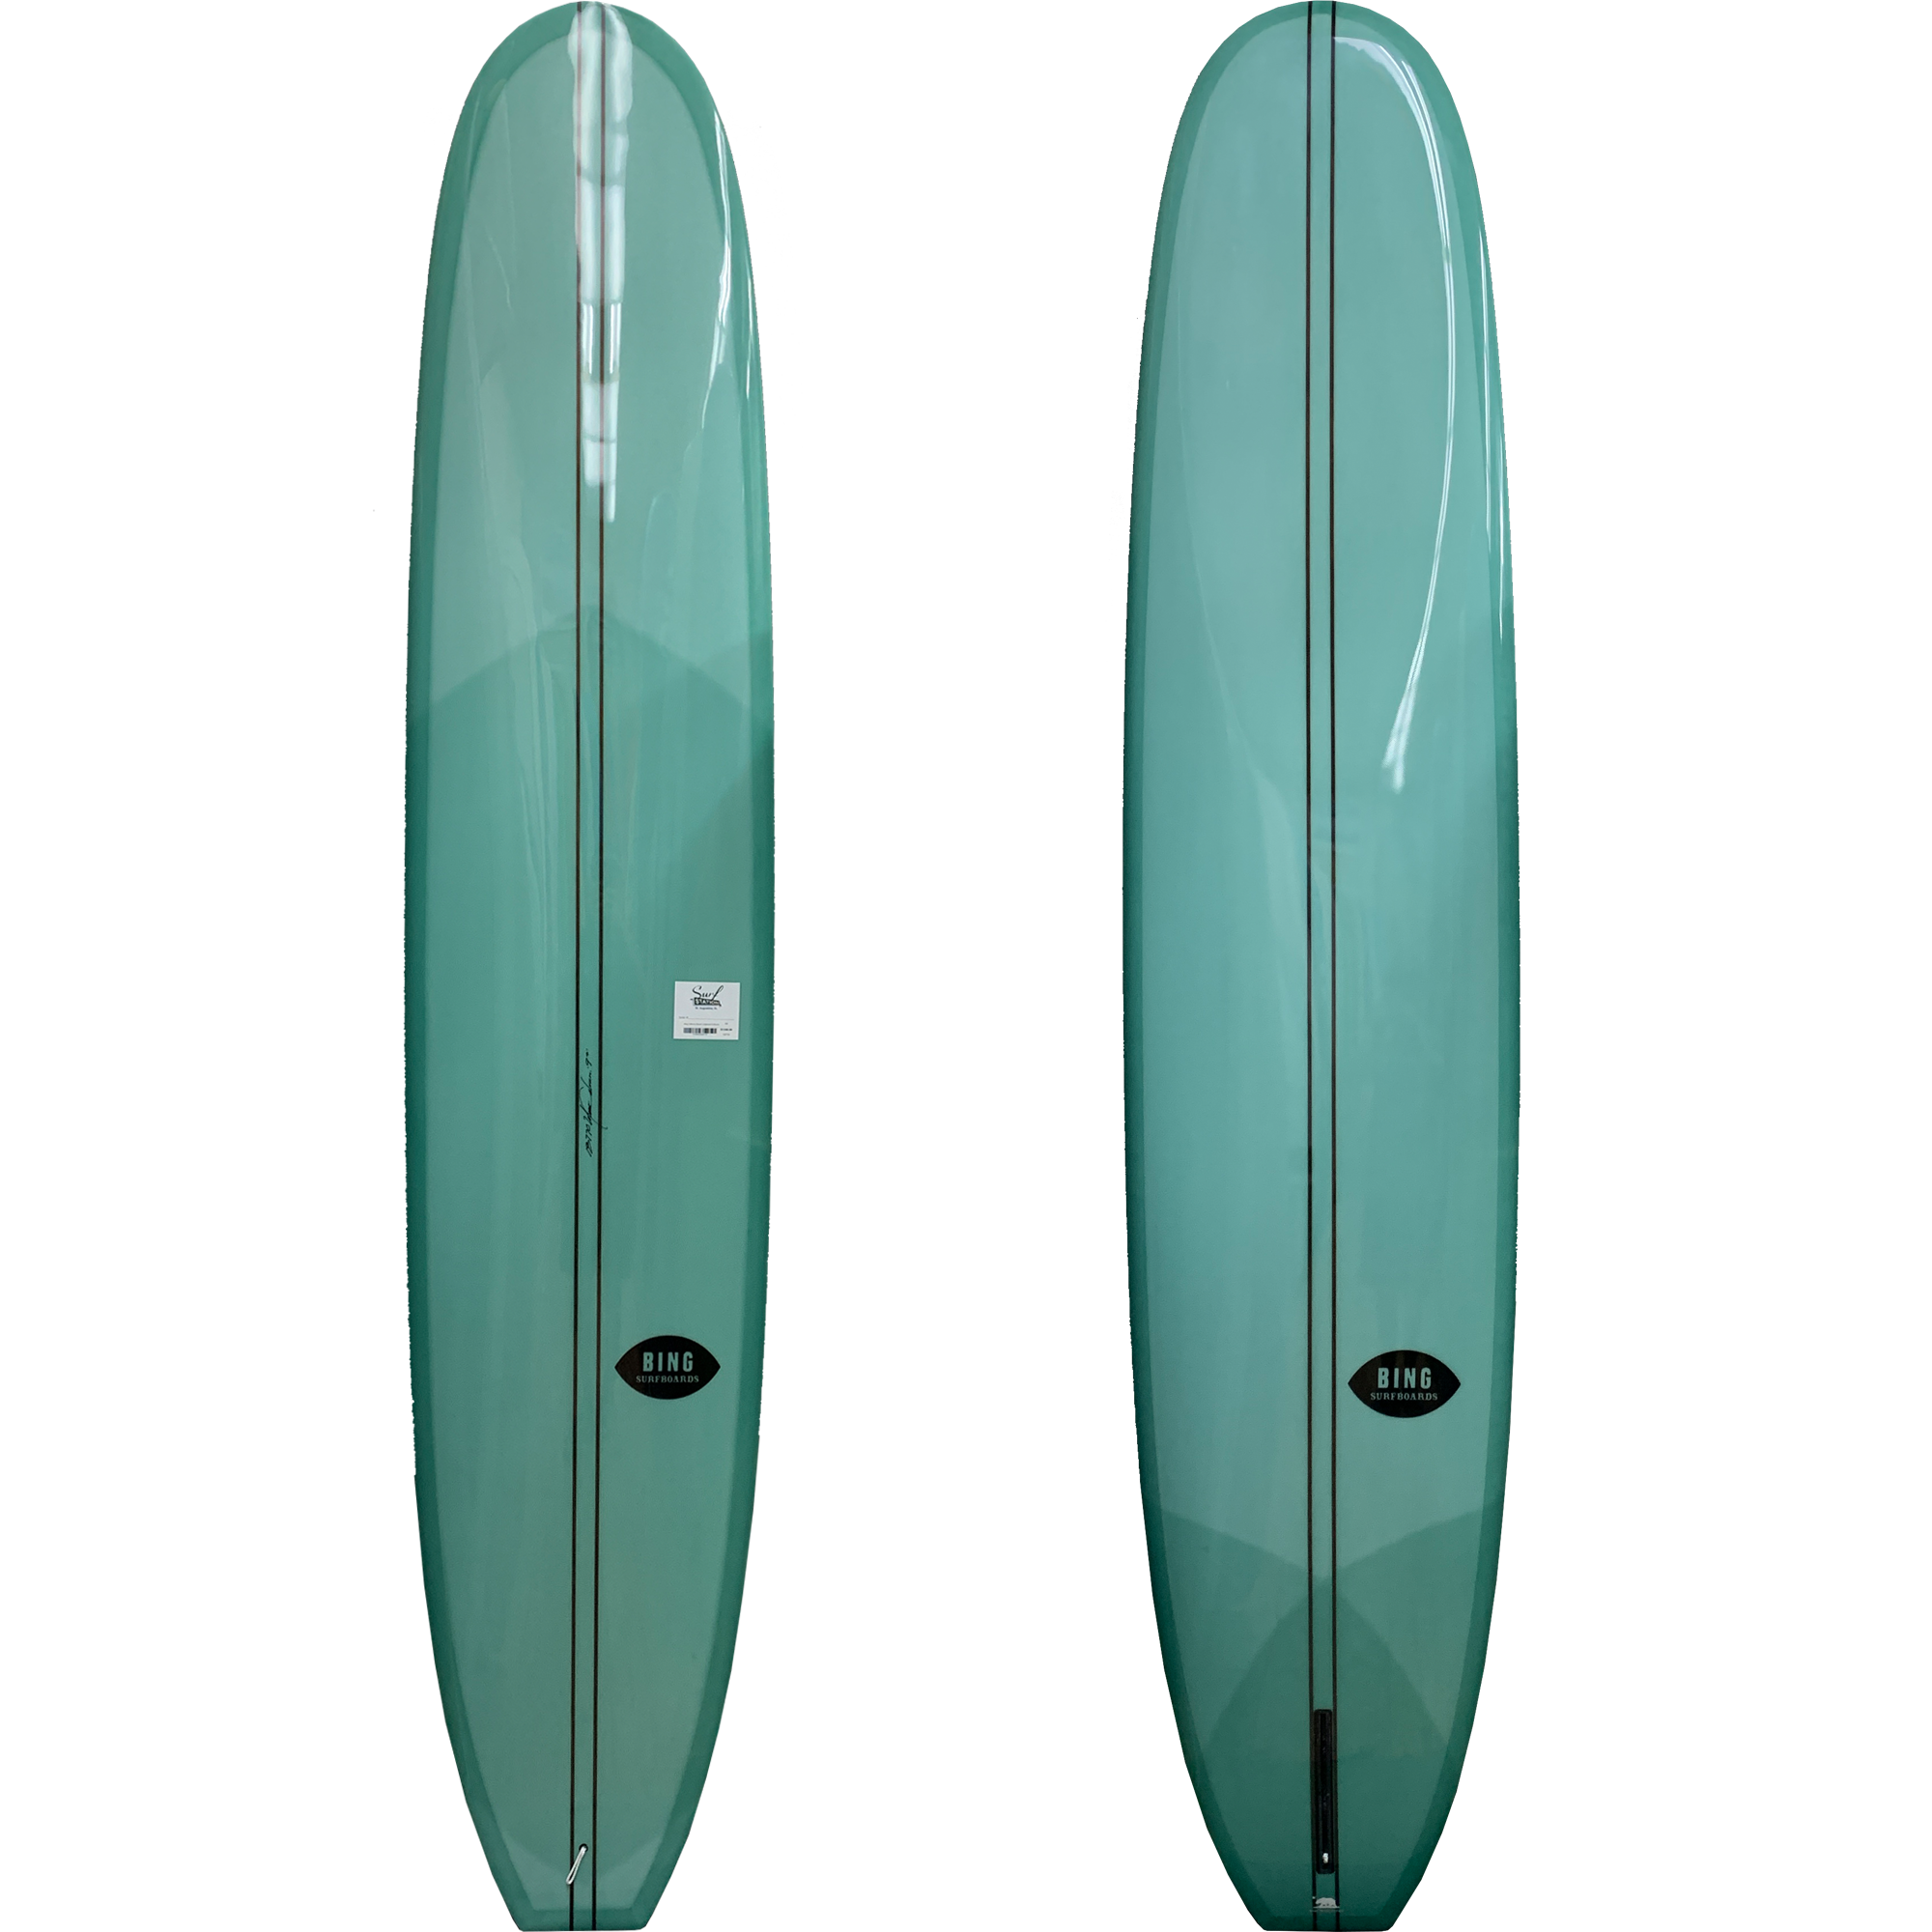 Bing California Square Longboard Surfboard